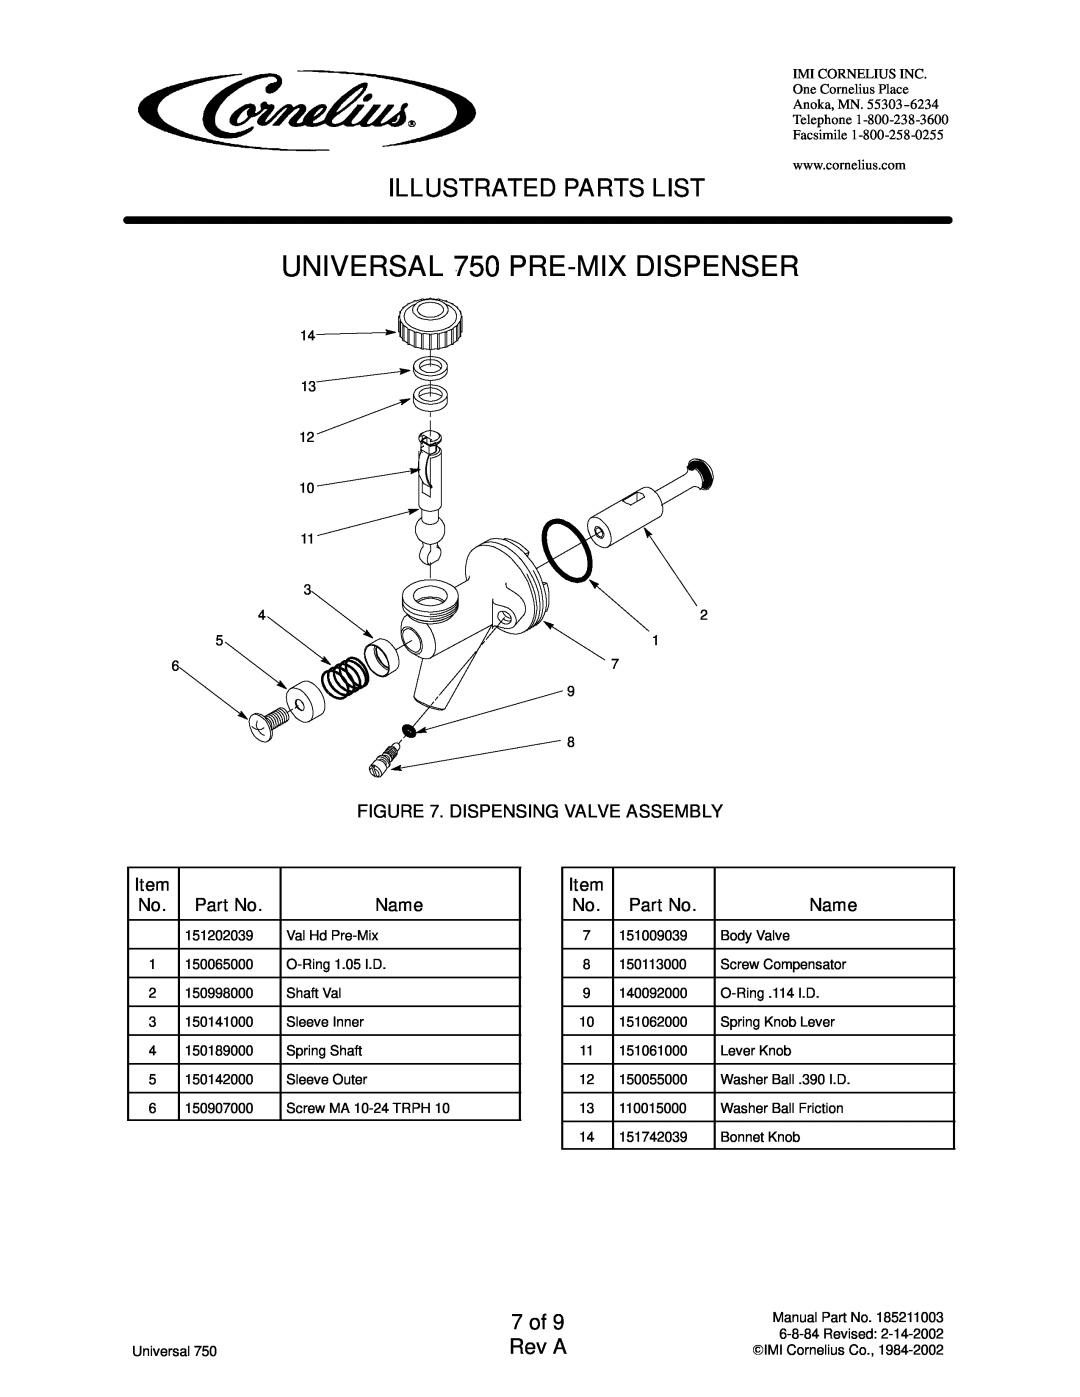 Cornelius 2849949xxx 7 of 9 Rev A, UNIVERSAL 750 PRE-MIXDISPENSER, Illustrated Parts List, Dispensing Valve Assembly, Name 